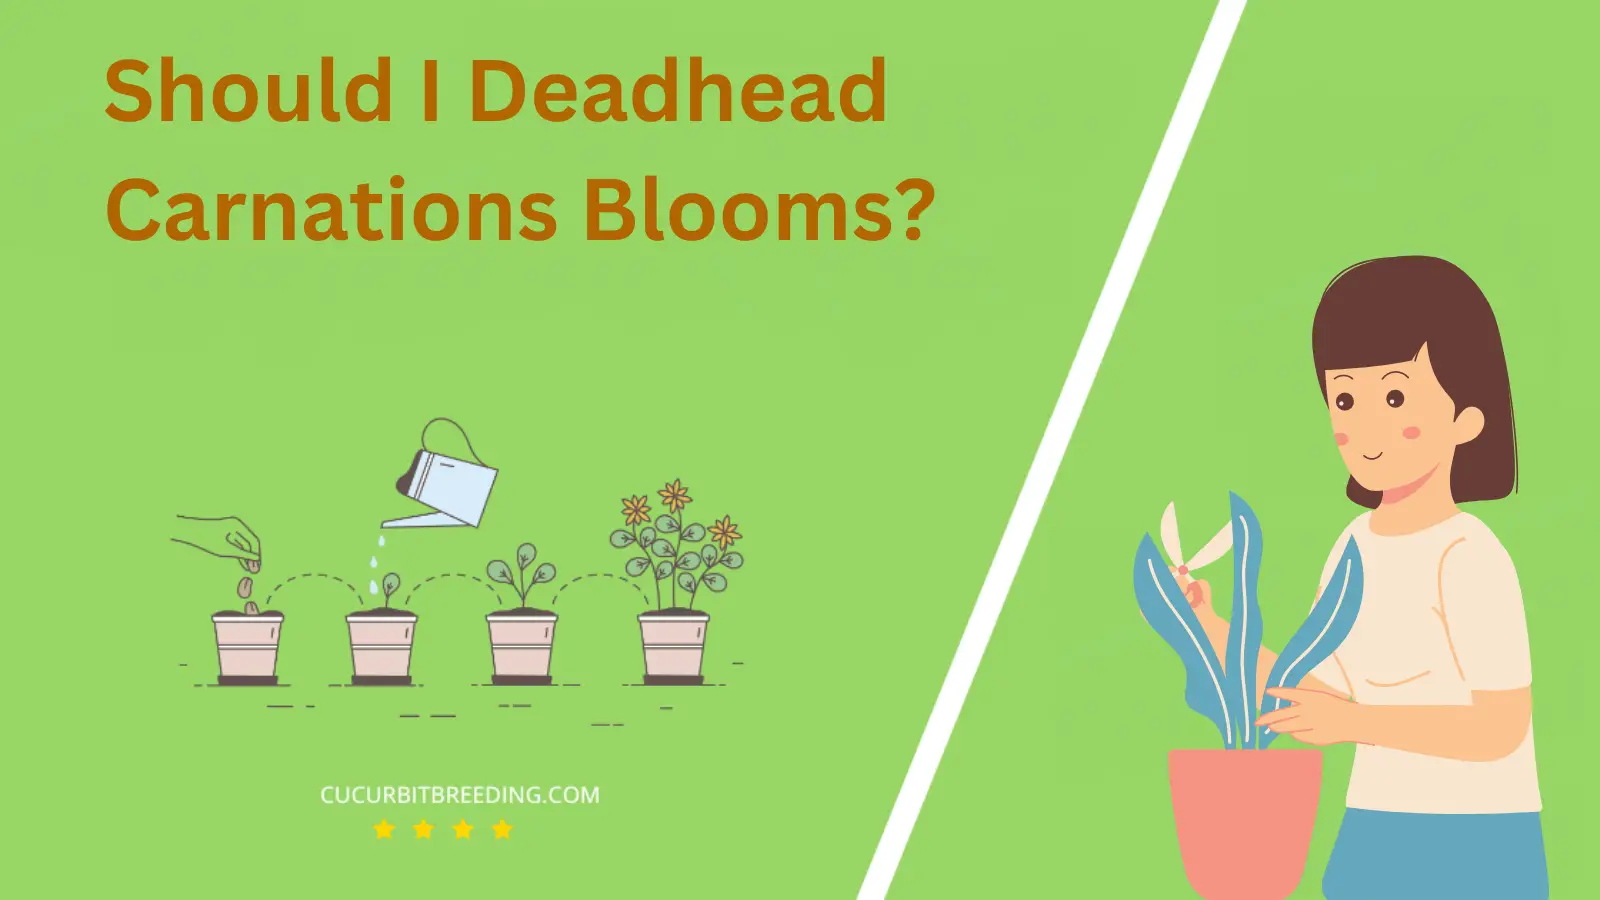 Should I Deadhead Carnations Blooms?